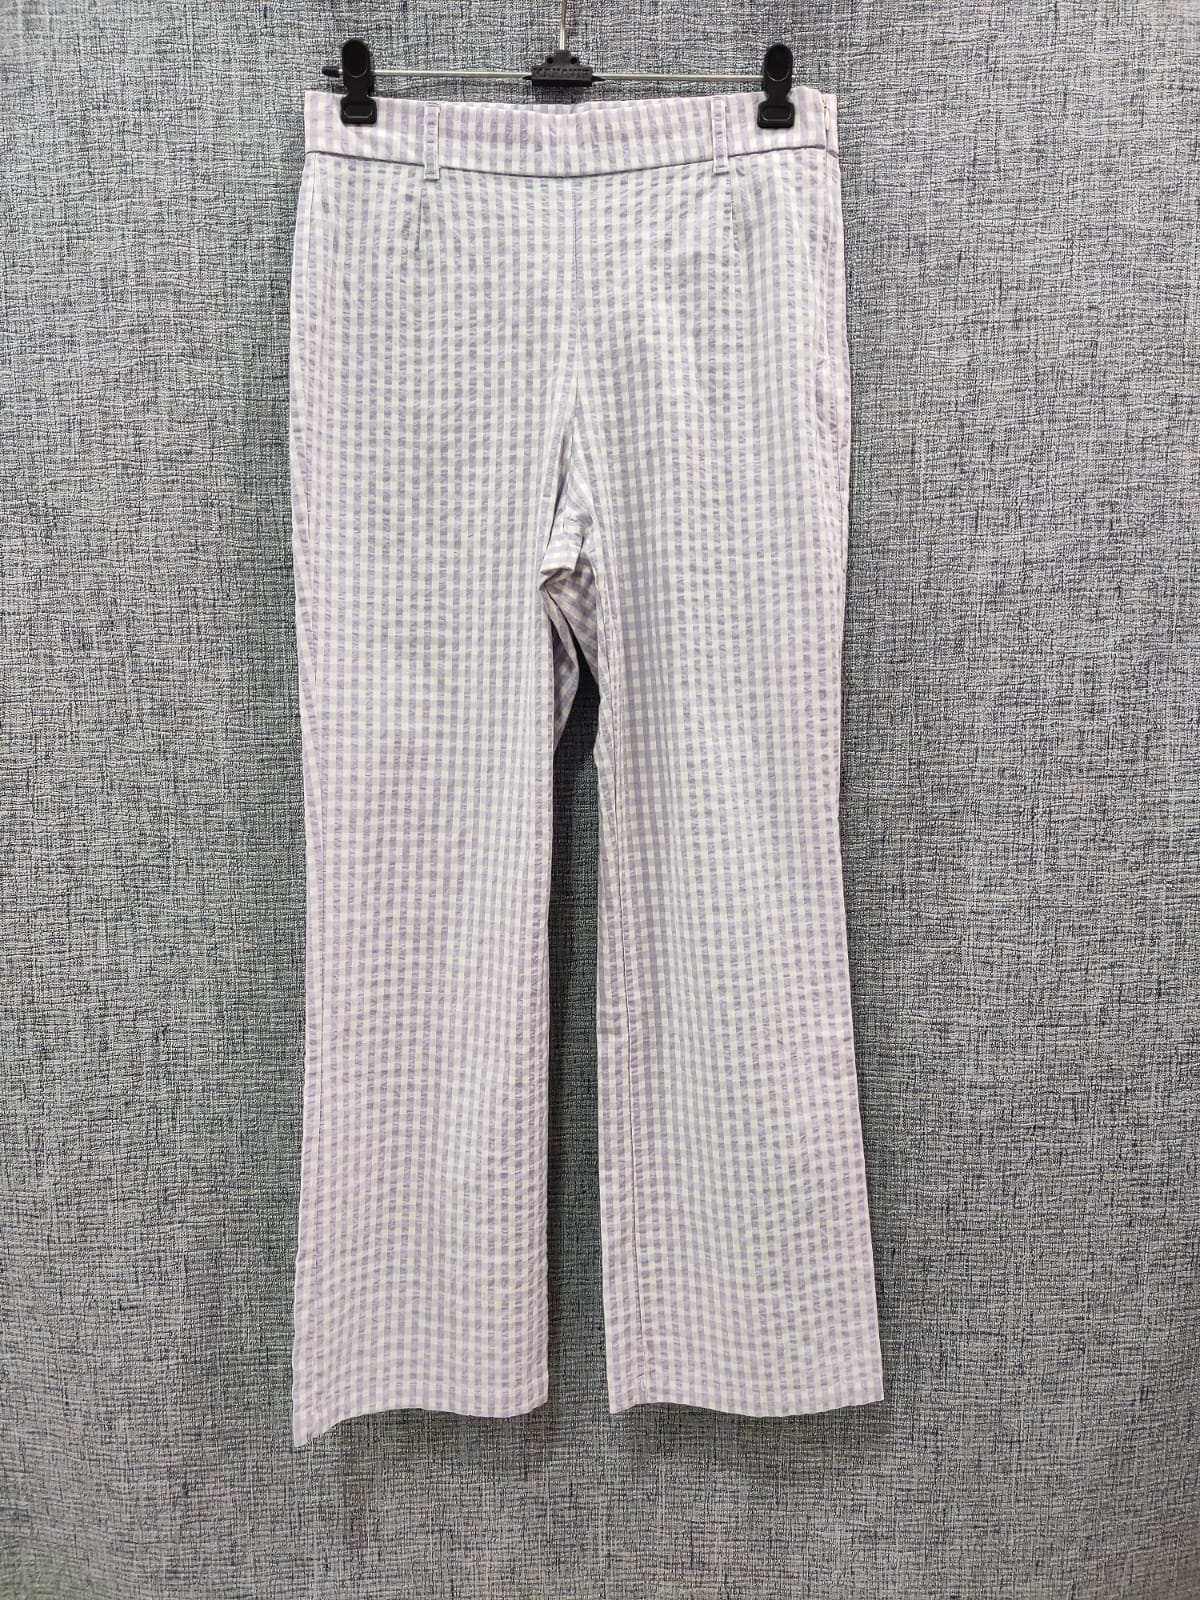 ZARA Lilac And White Plaid Pants | Relove